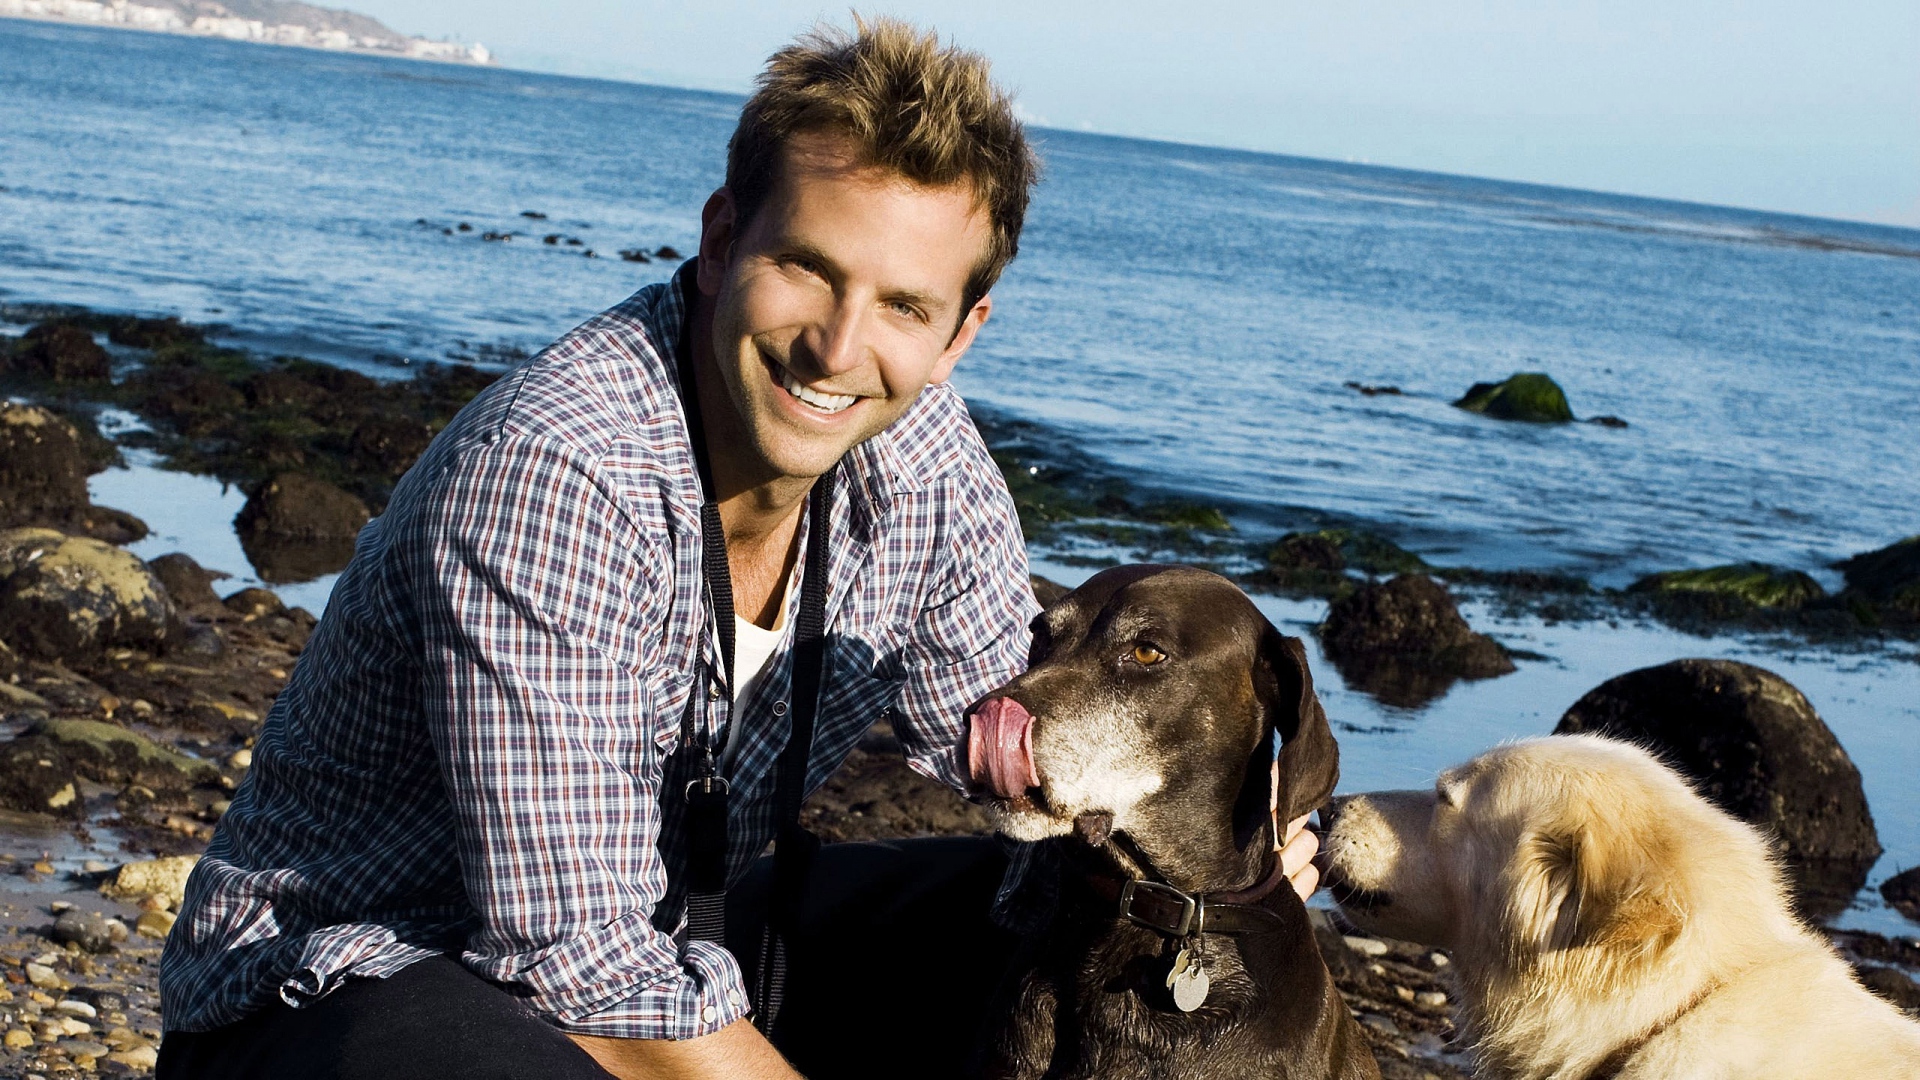 Full HD Wallpaper Bradley Cooper Smile Coast Sea Dog